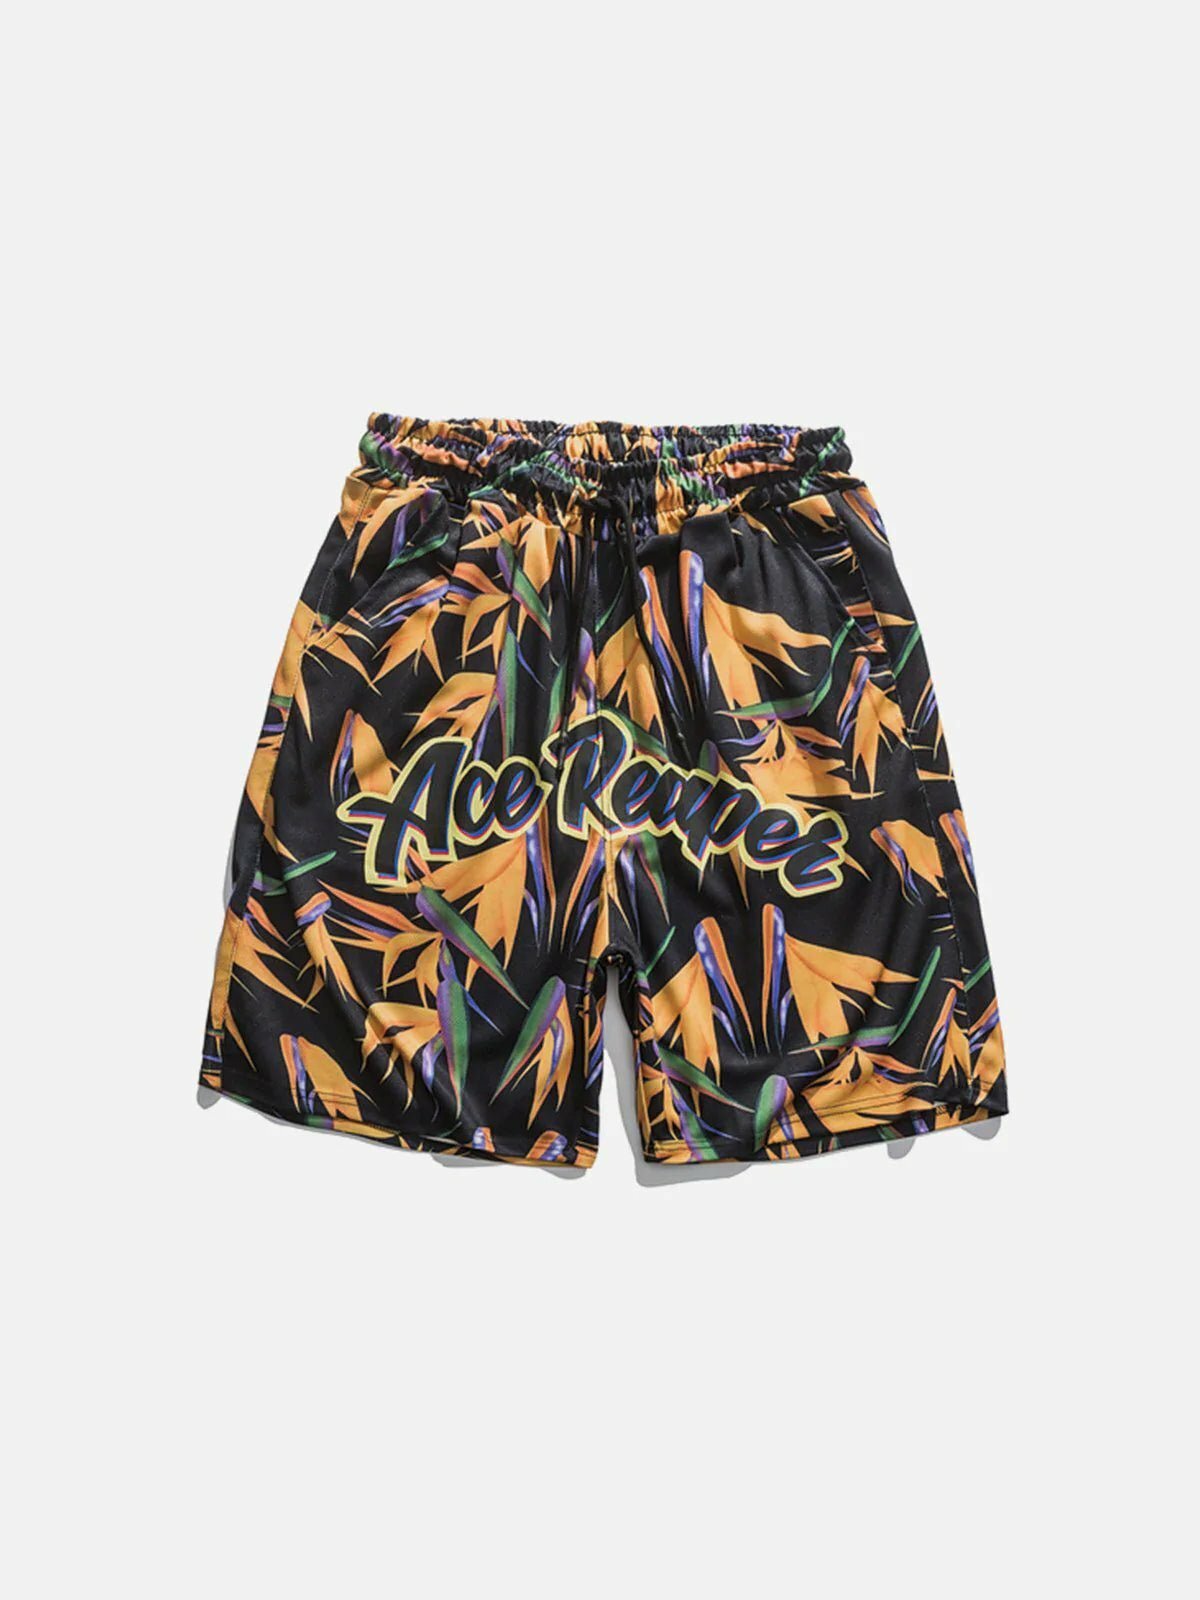 vibrant leaf print shorts youthful  retro beachwear 3960